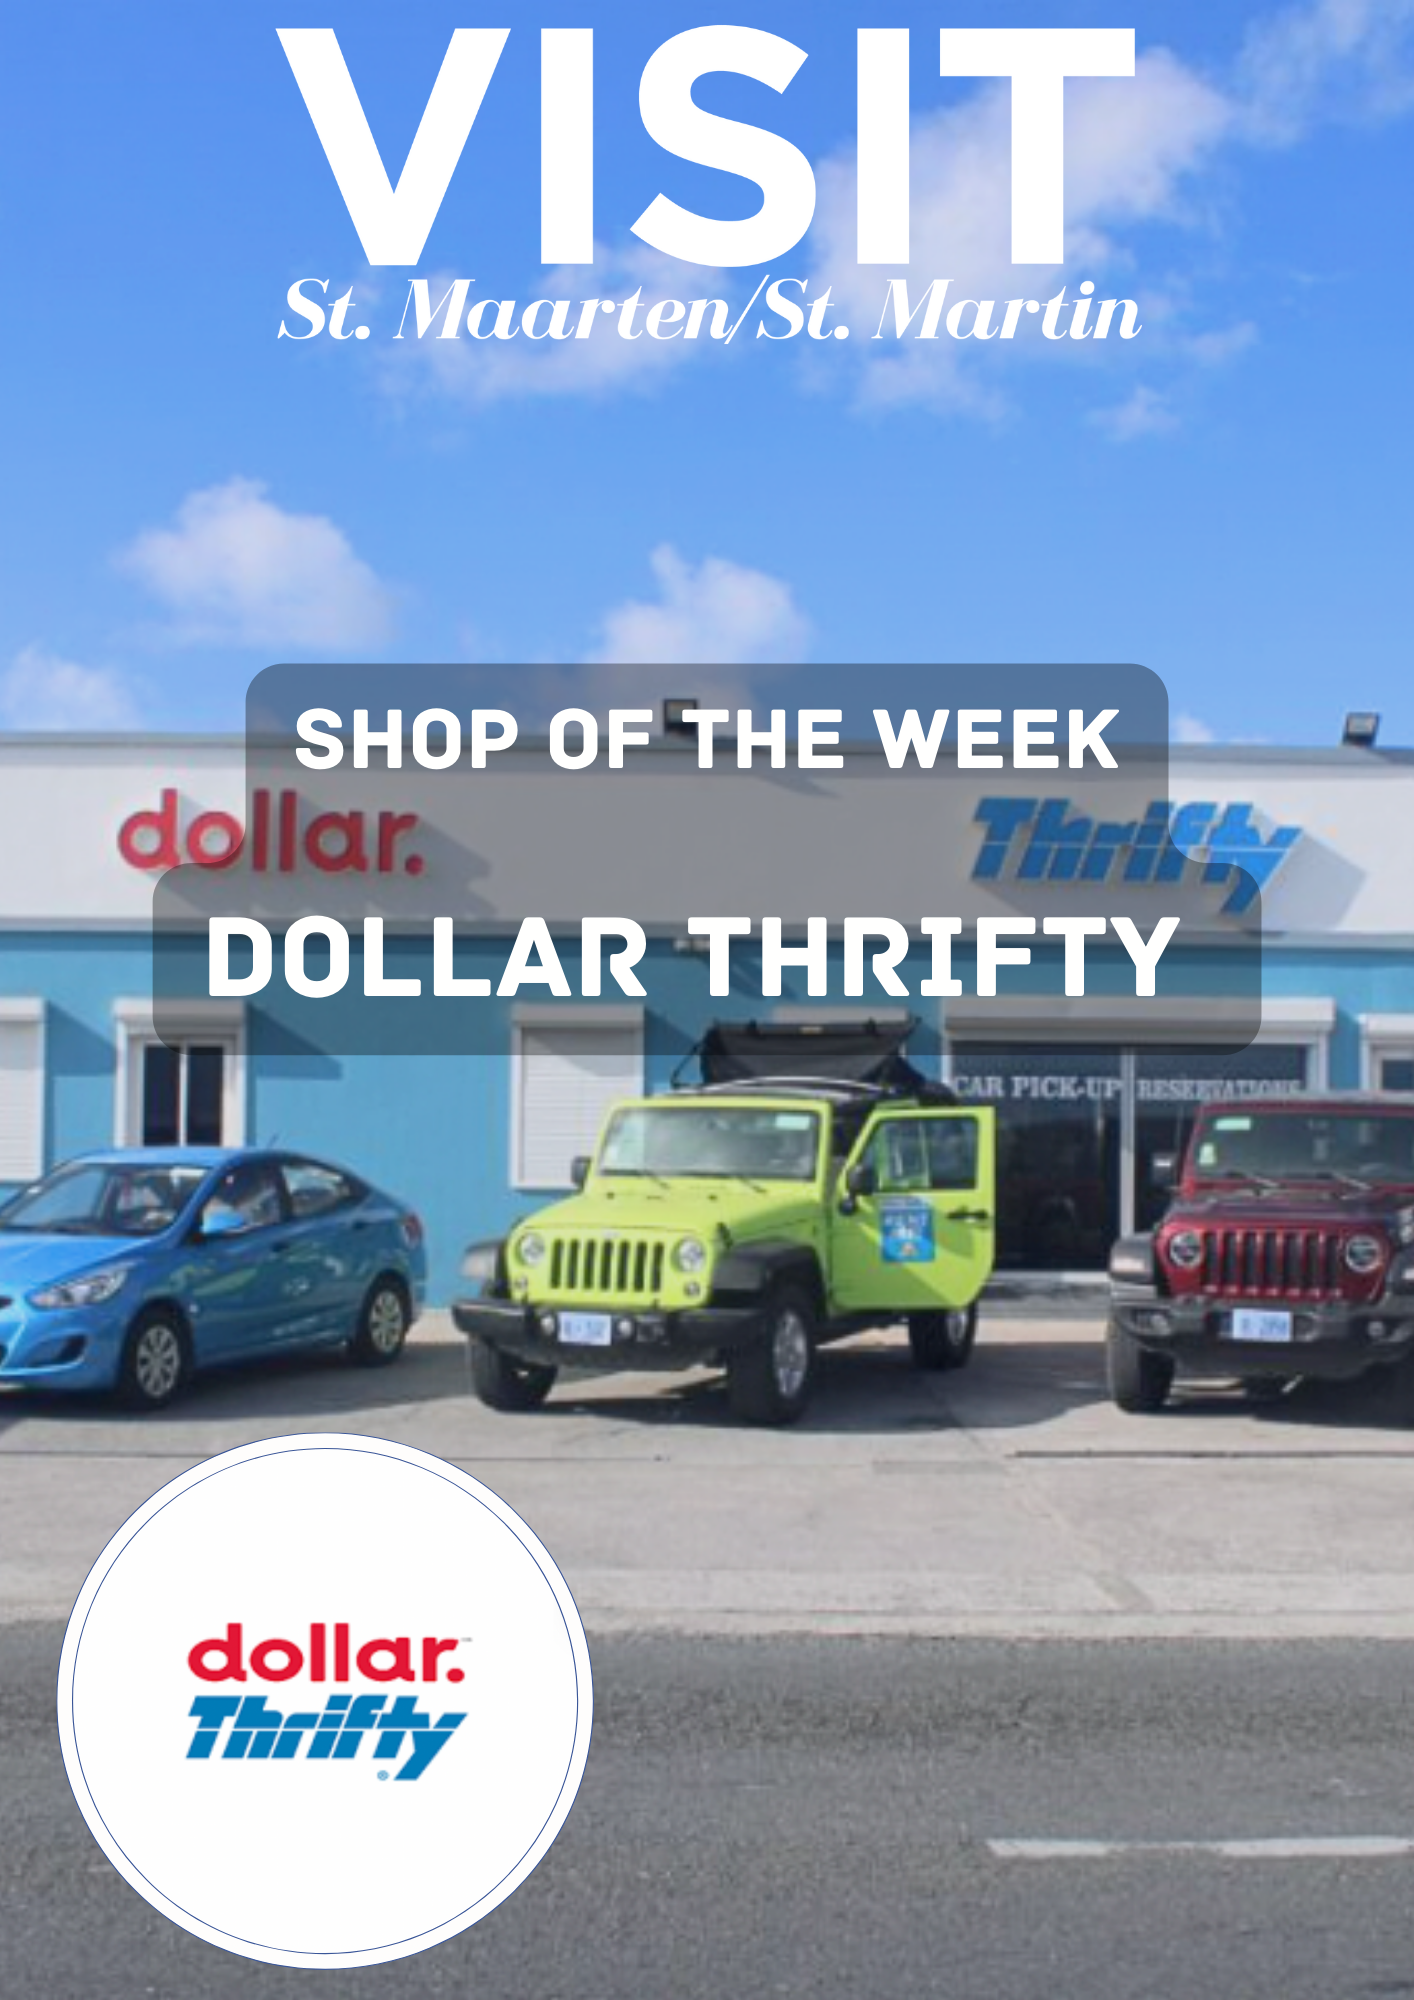 Shop of the week is Dollar Thrifty car rental on St Maarten